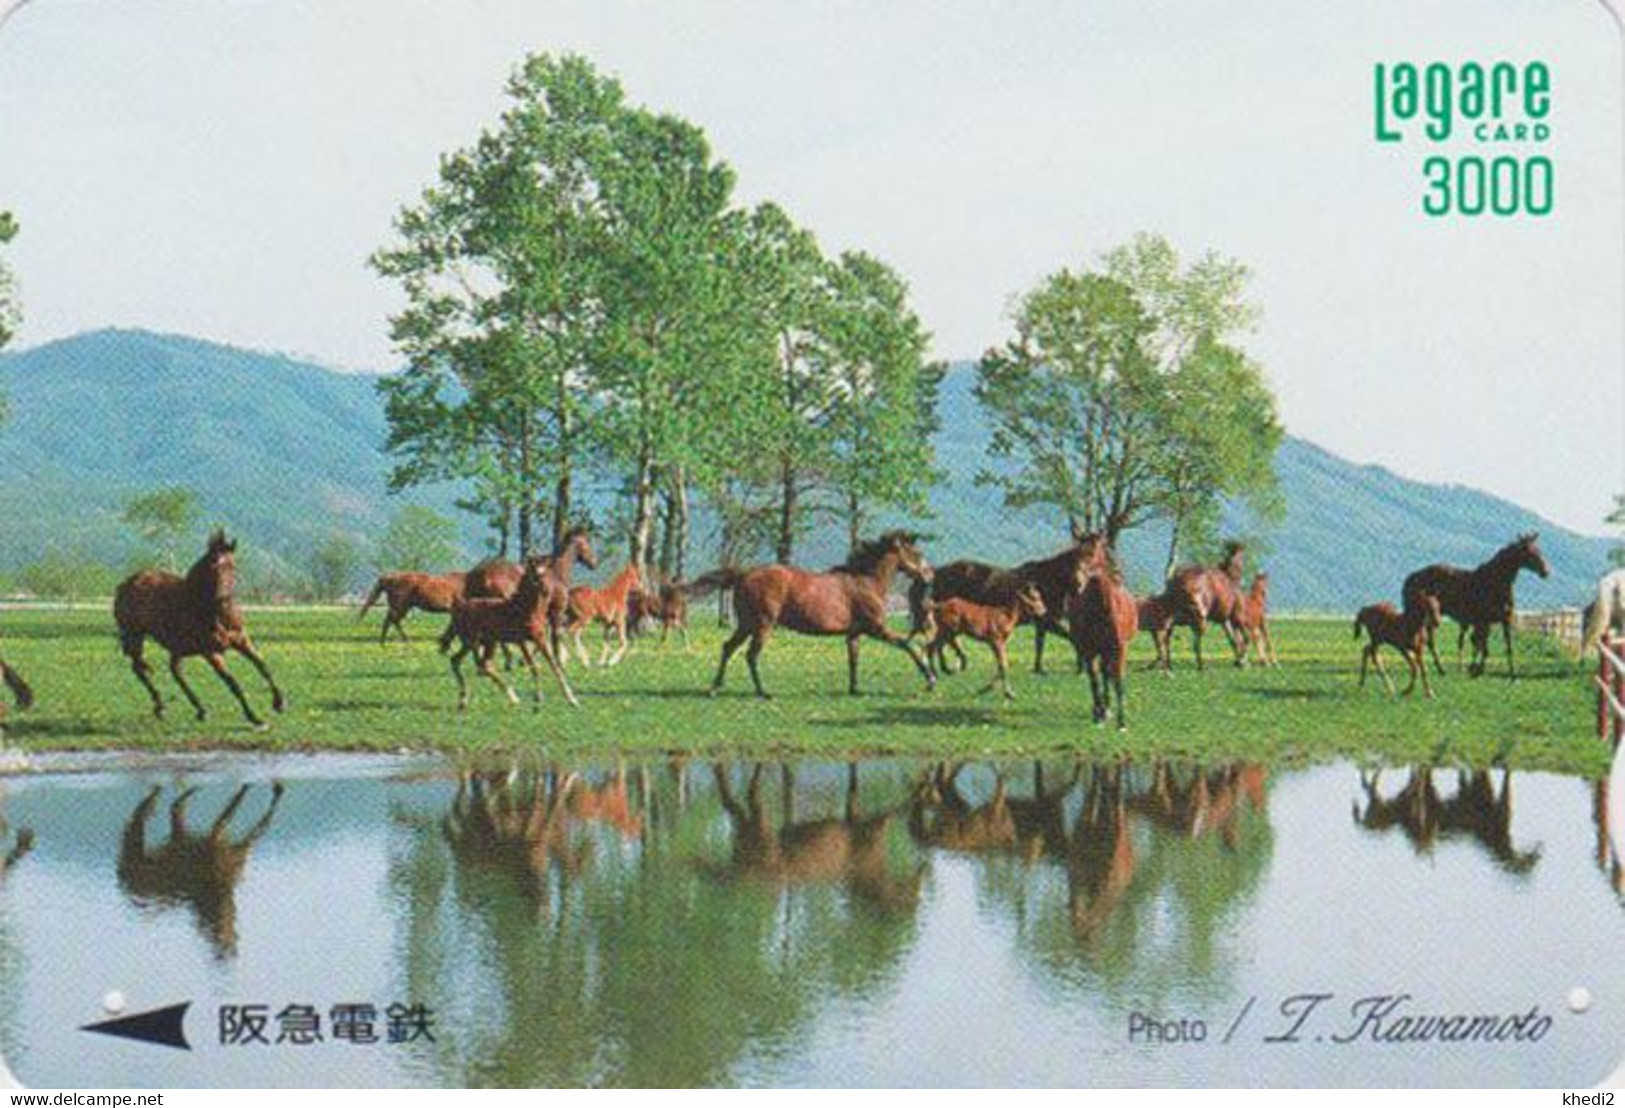 Carte Prépayée JAPON - ANIMAL - CHEVAL Chevaux - HORSE JAPAN Prepaid Kansai Lagare Ticket Card - 393 - Horses